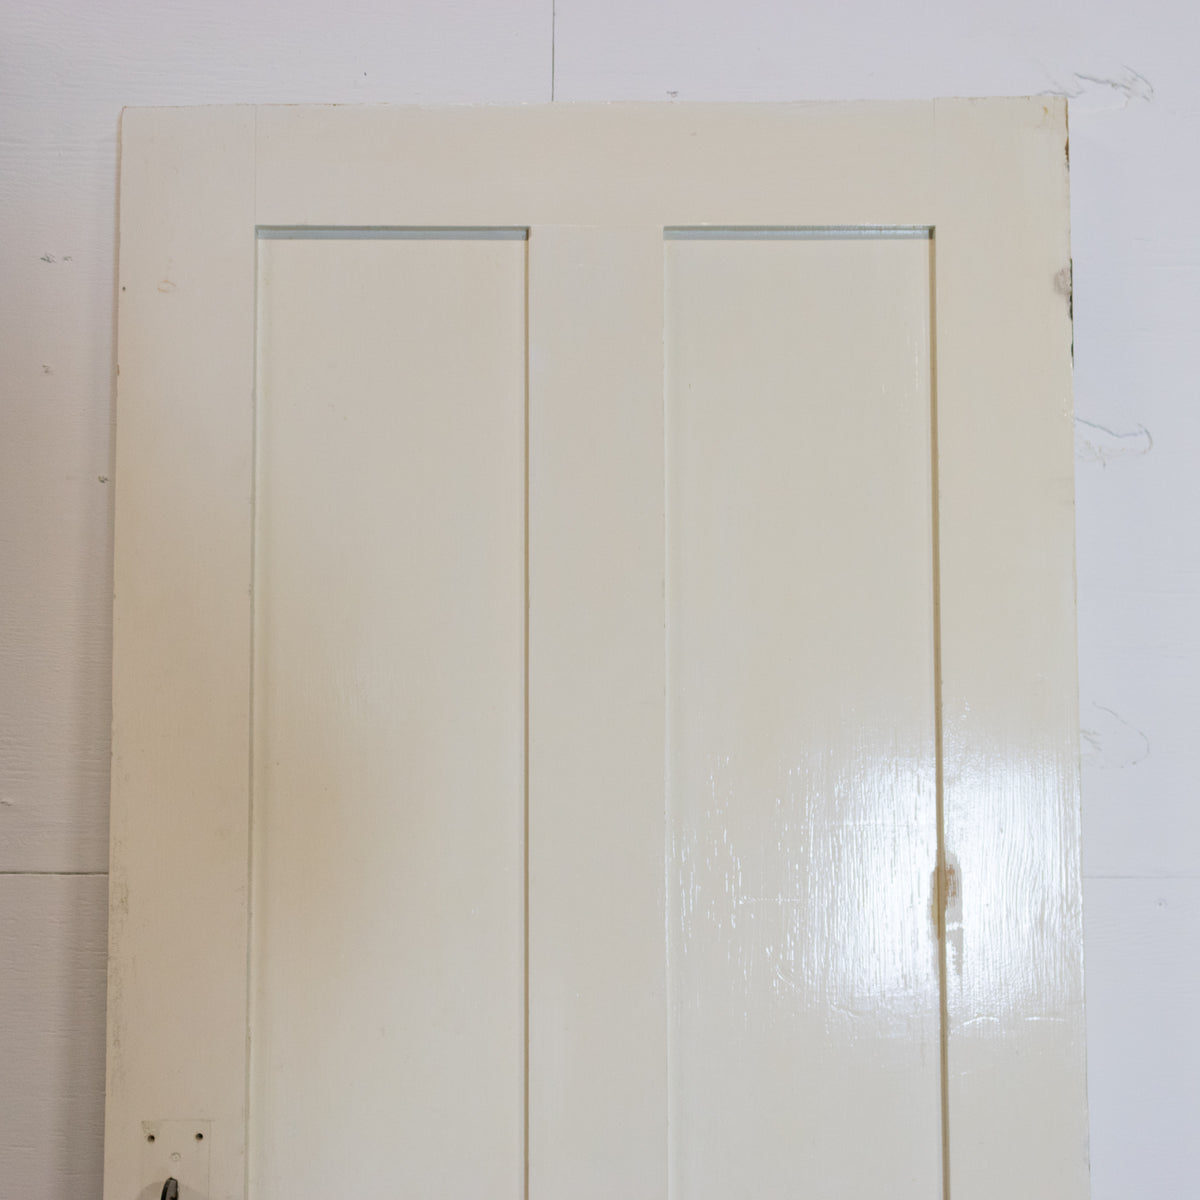 Antique Victorian 4 Panel Door - 176.5cm x 64.5cm | The Architectural Forum